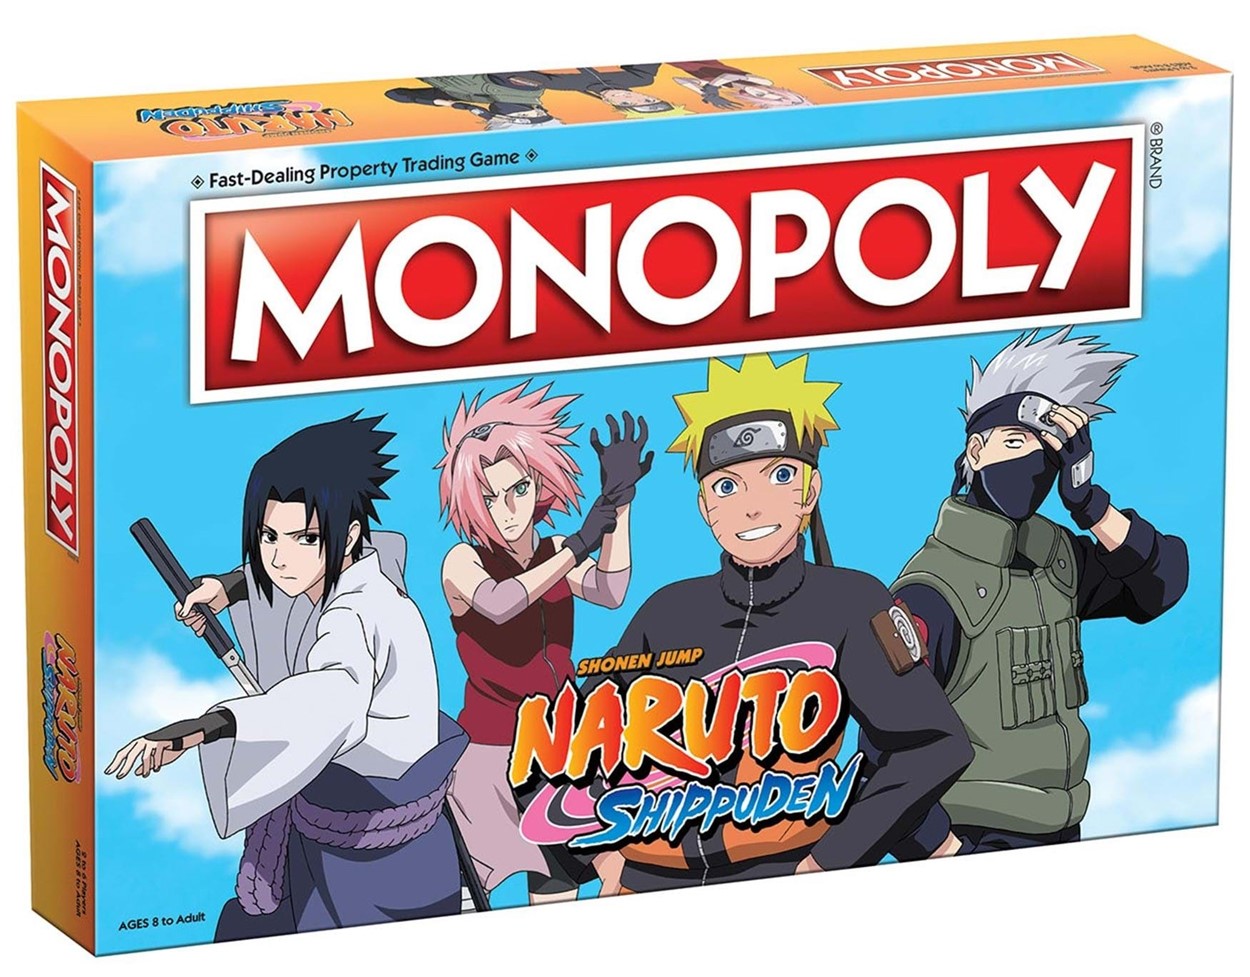 Naruto Shippuden Monopoly Board Game